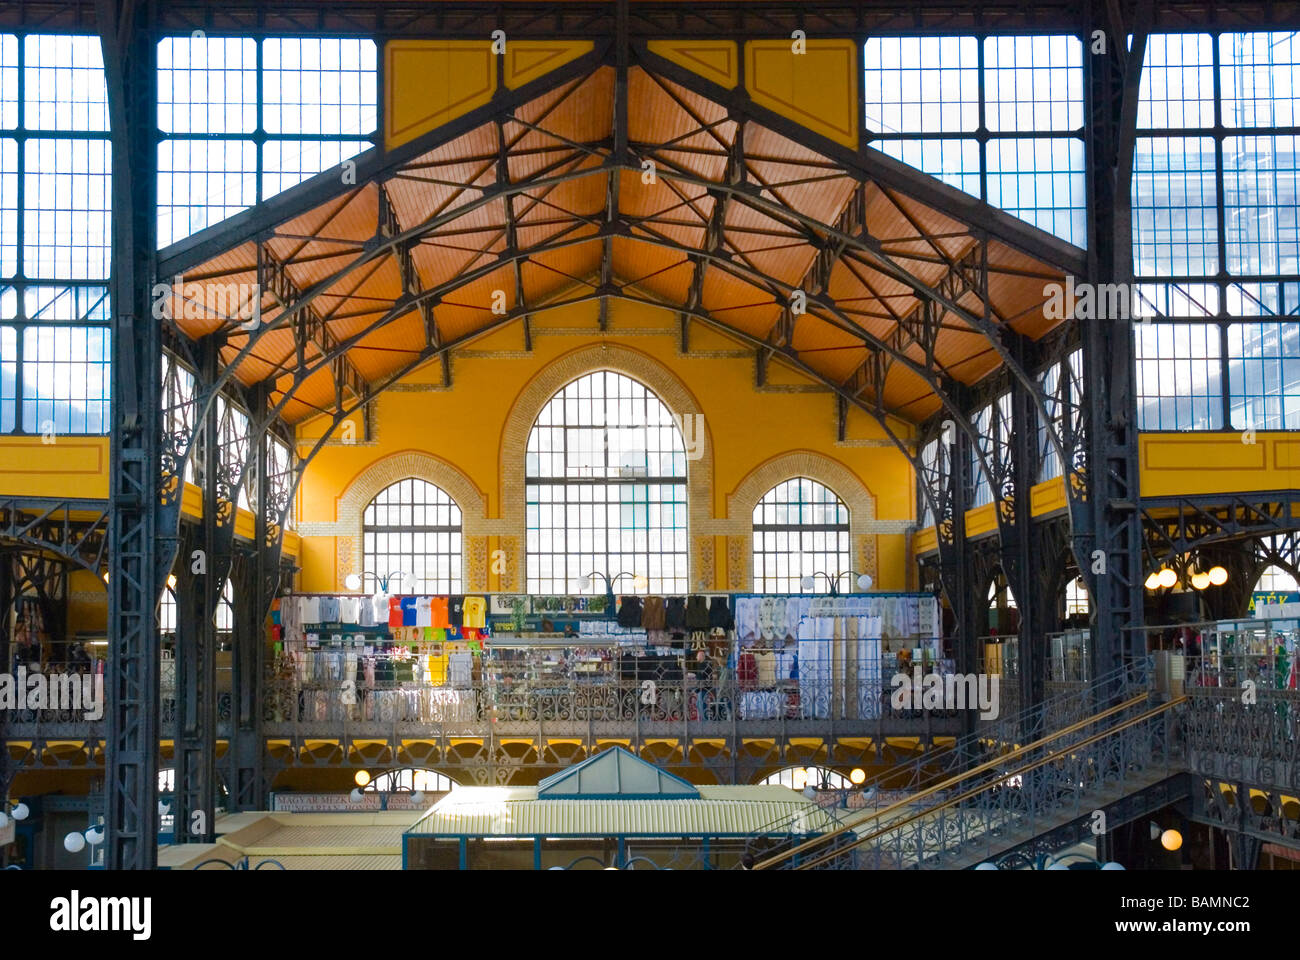 Nagy Vasarcsarnok die große Markthalle in Budapest Ungarn-Mitteleuropa Stockfoto